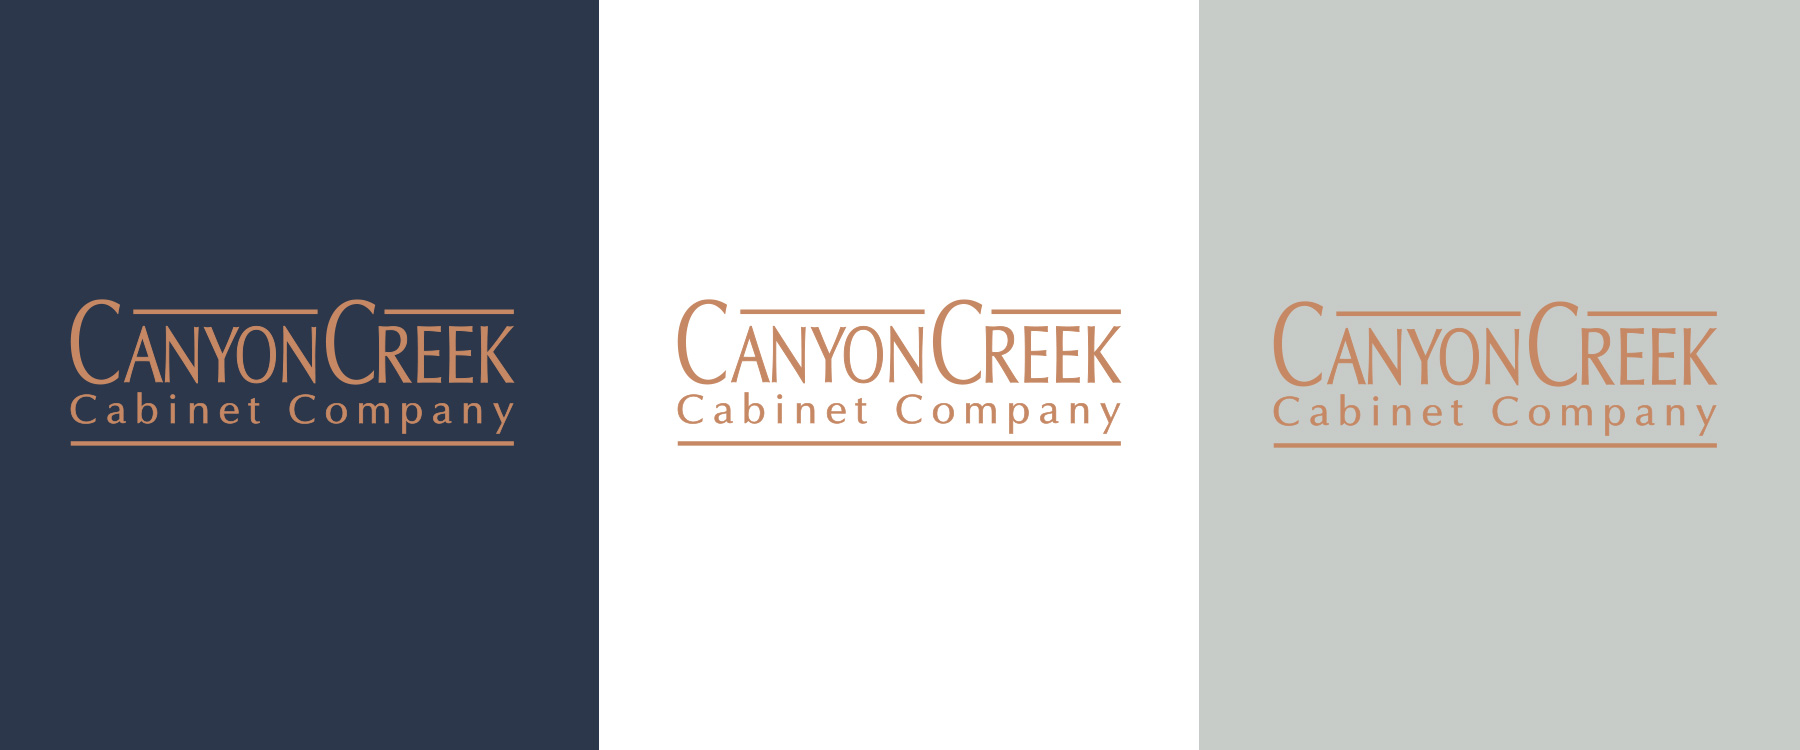 Canyon Creek Cabinet Company Logo | Canyon Creek Cabinet Company